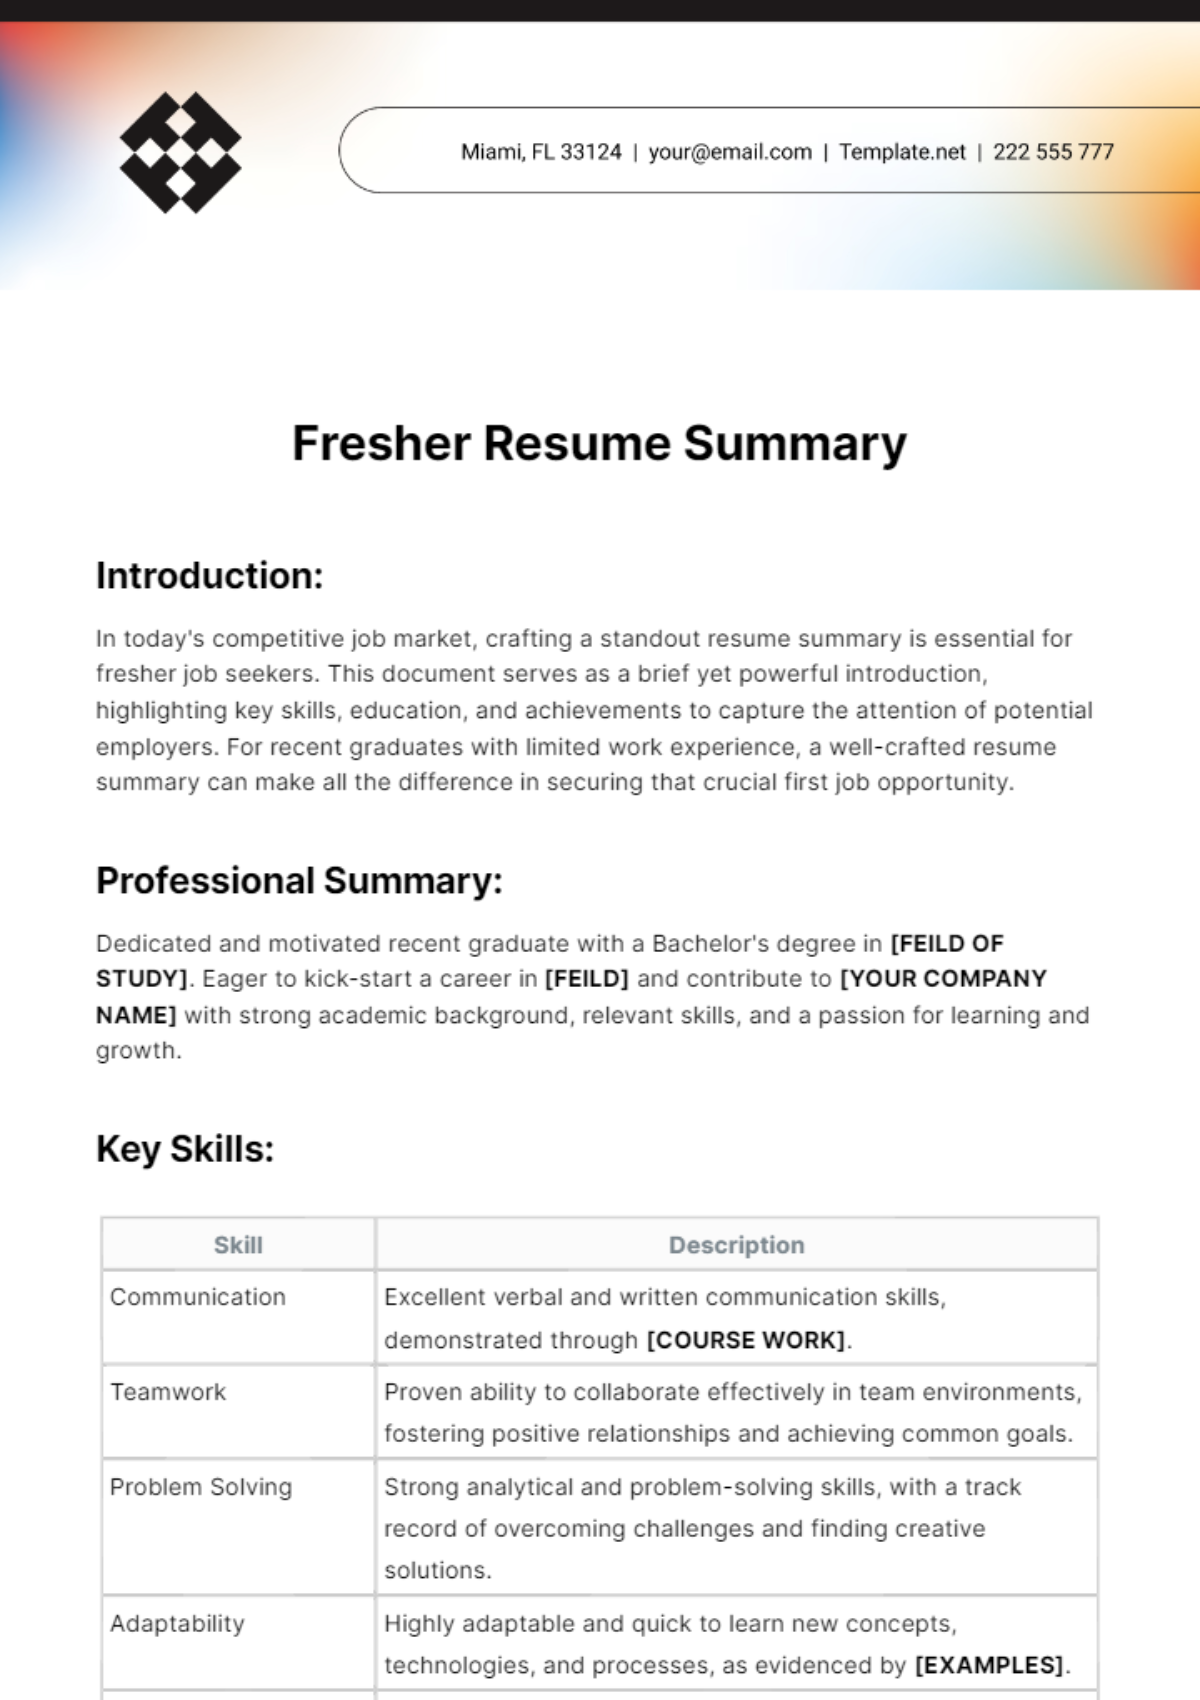 Fresher Resume Summary Template